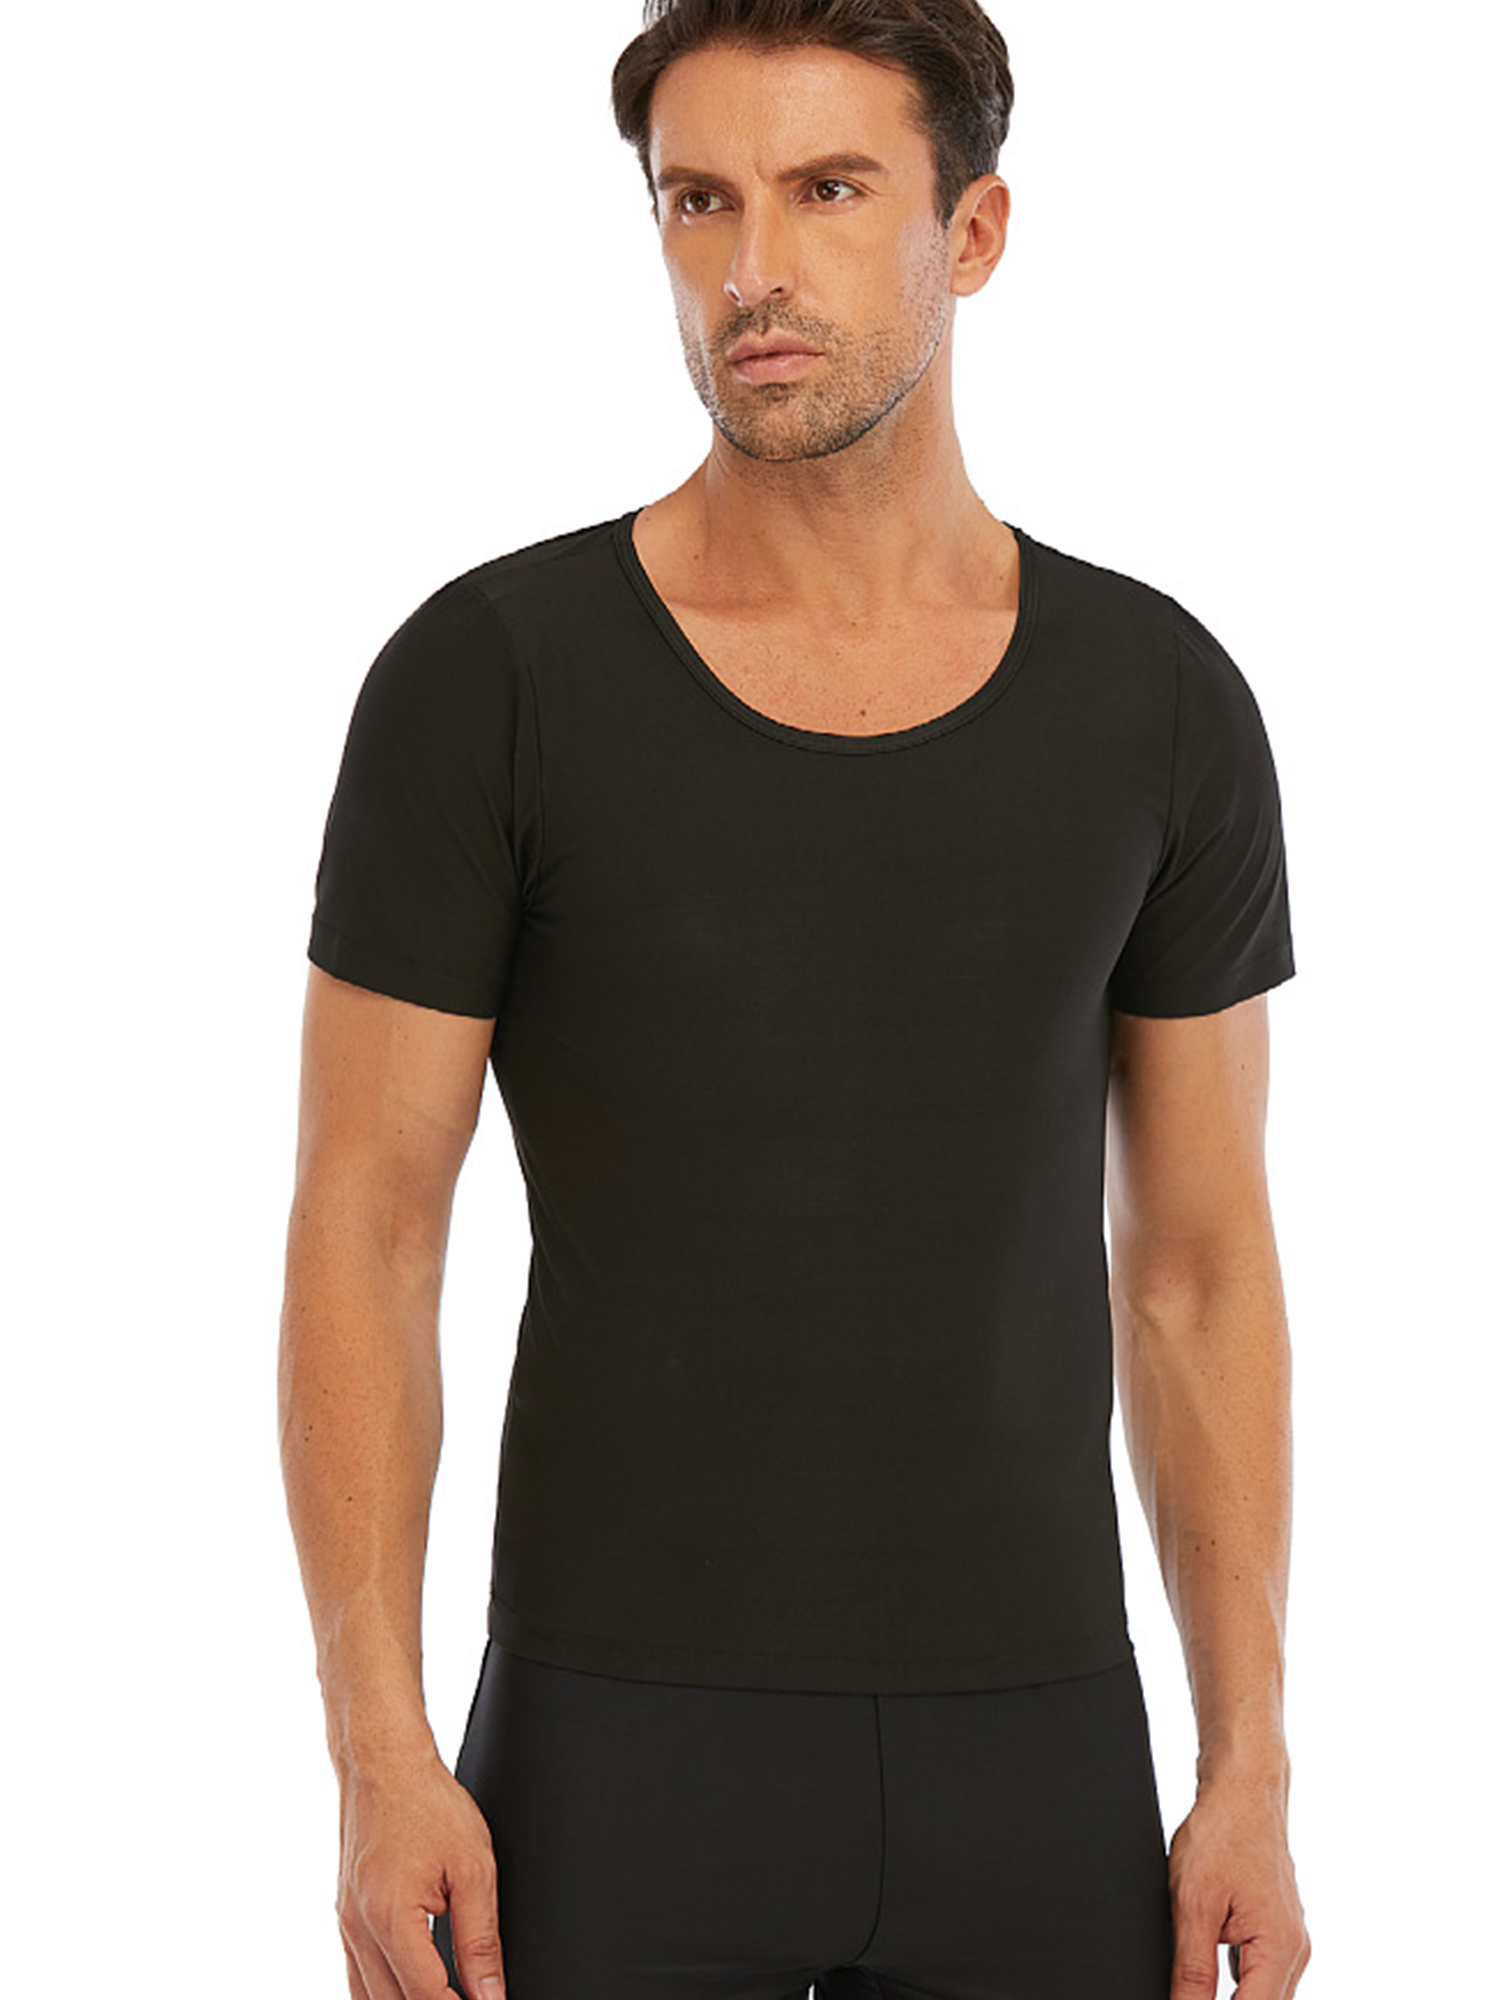 Sauna Shirt for Men Sweat Suit Compression T-Shirt Weight Loss